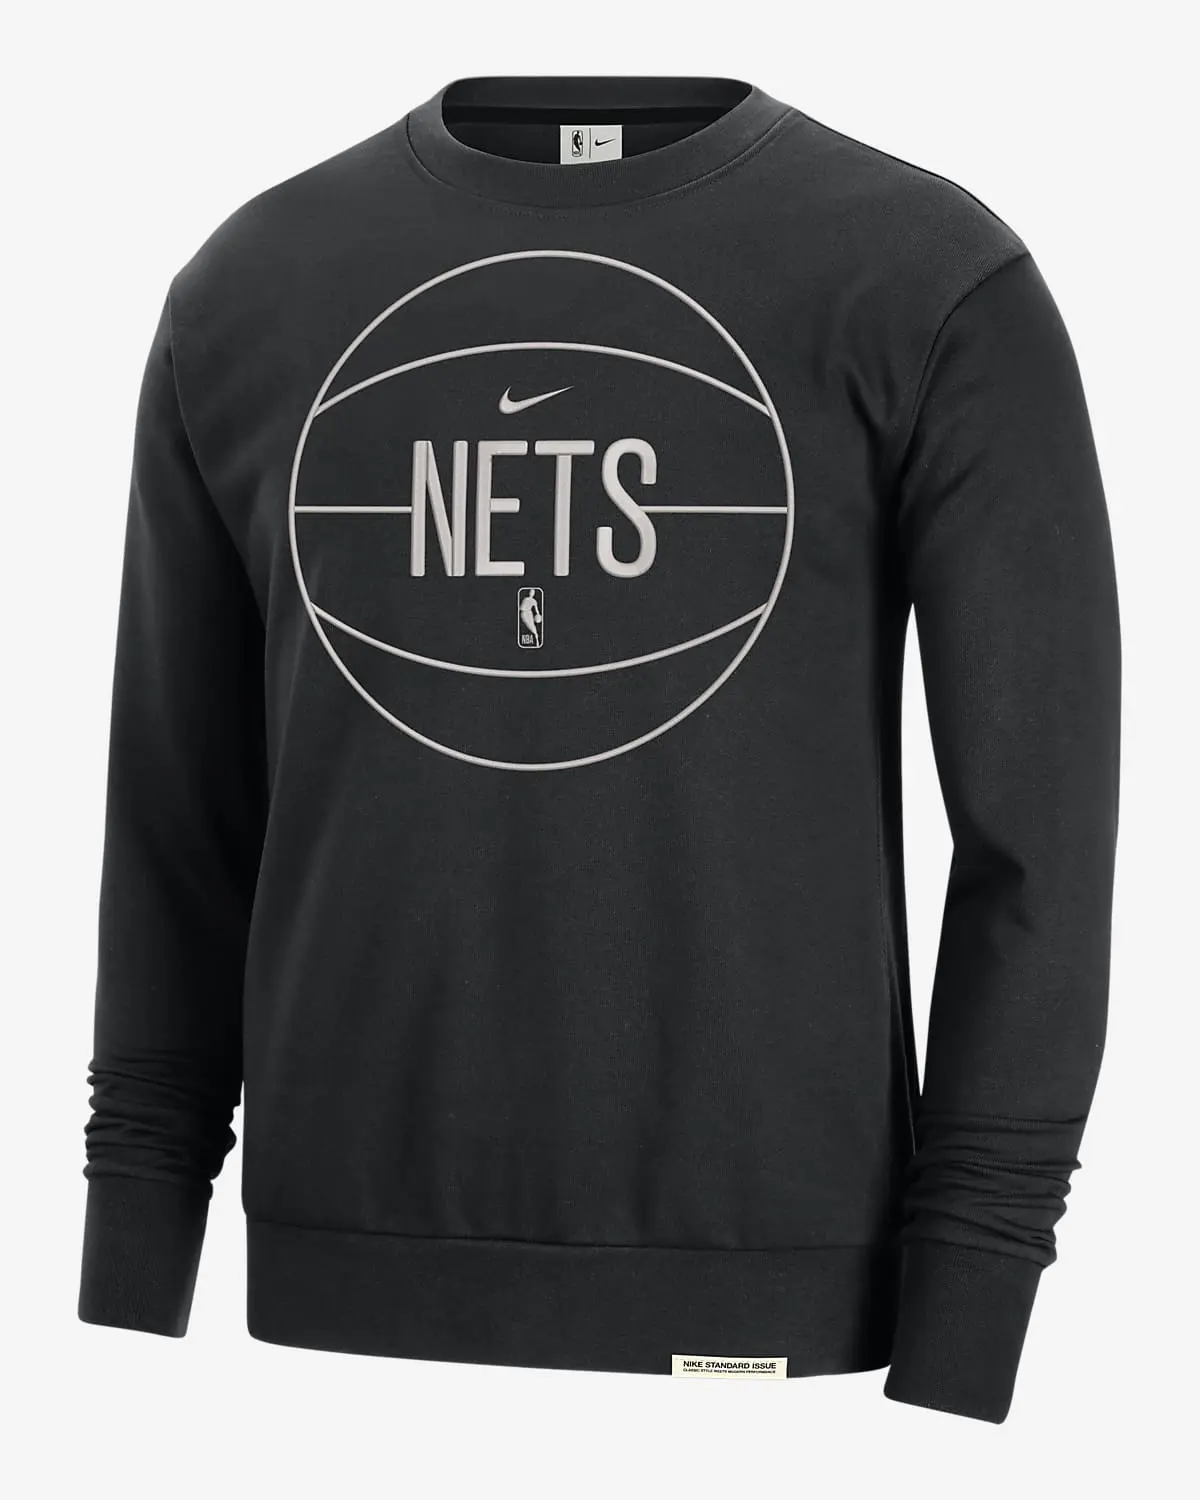 Nike Brooklyn Nets Standard Issue. 1